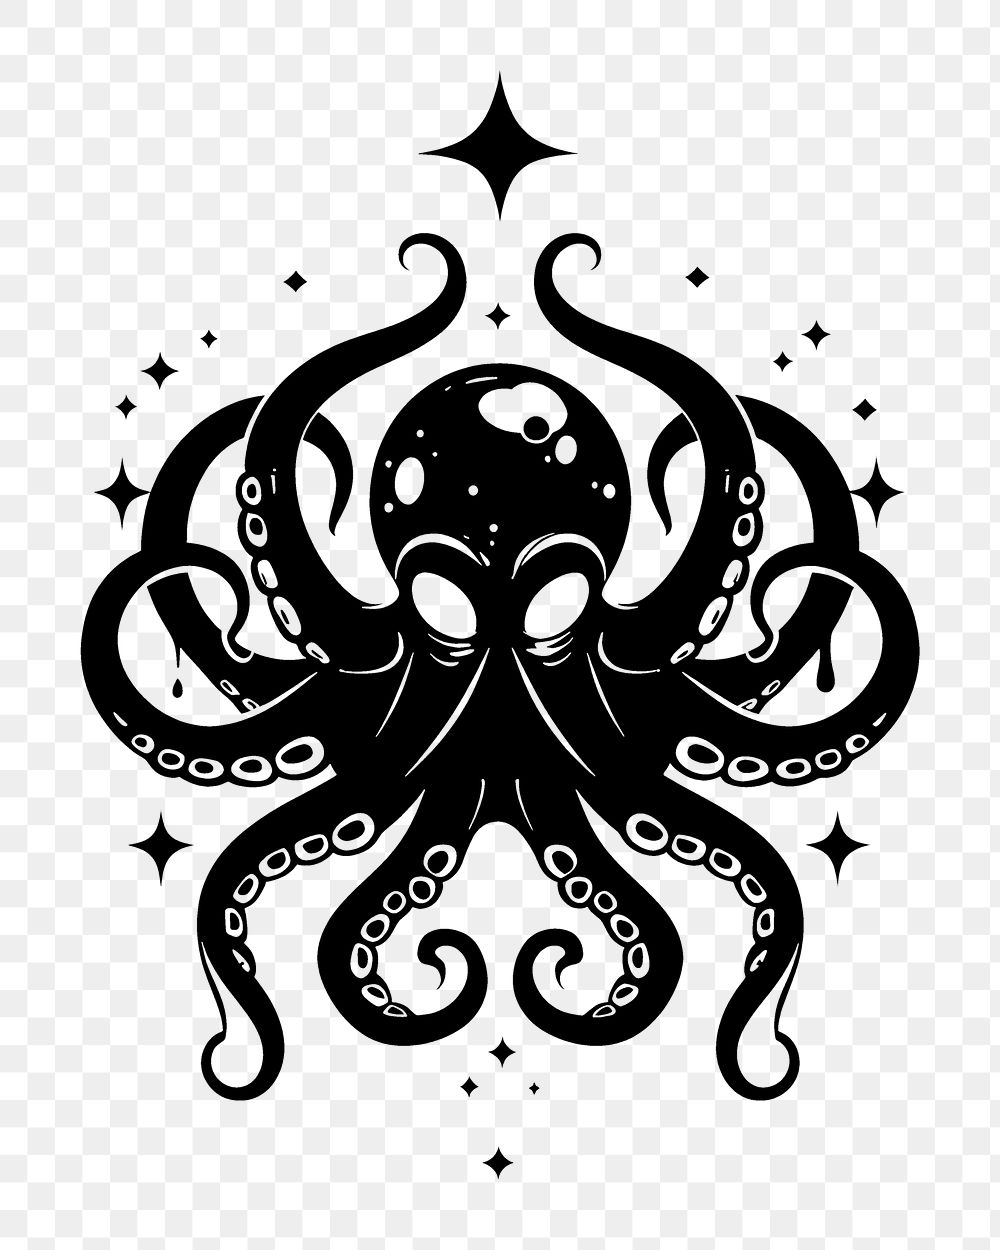 PNG Surreal aesthetic octopus logo stencil symbol emblem.